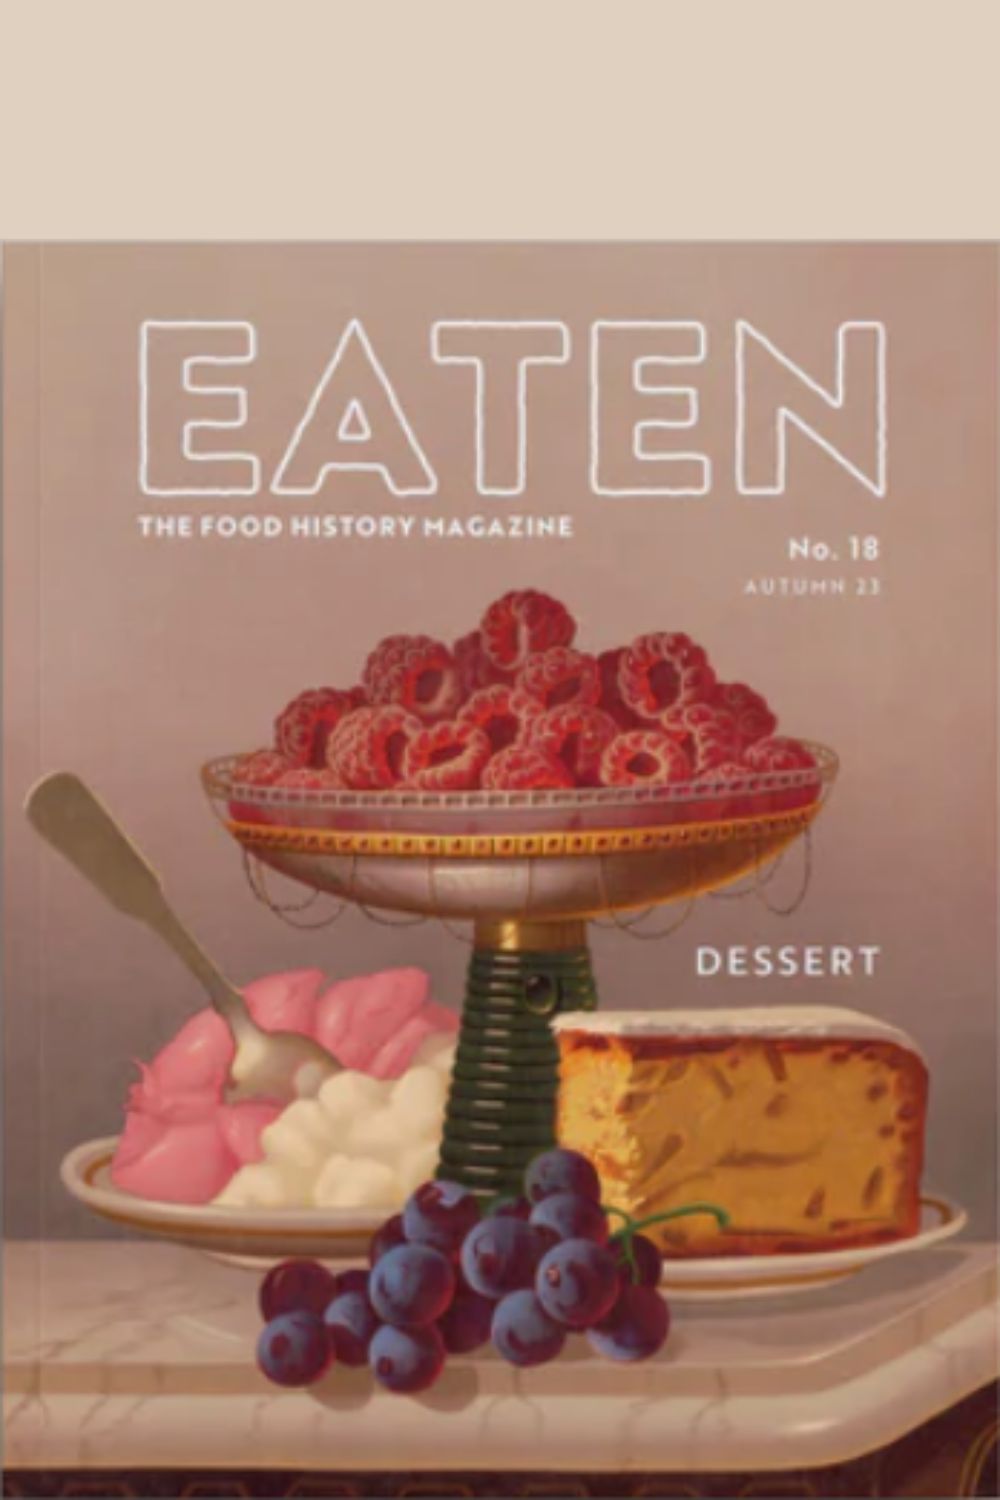 Eaten Magazine No. 18 Desserts cover